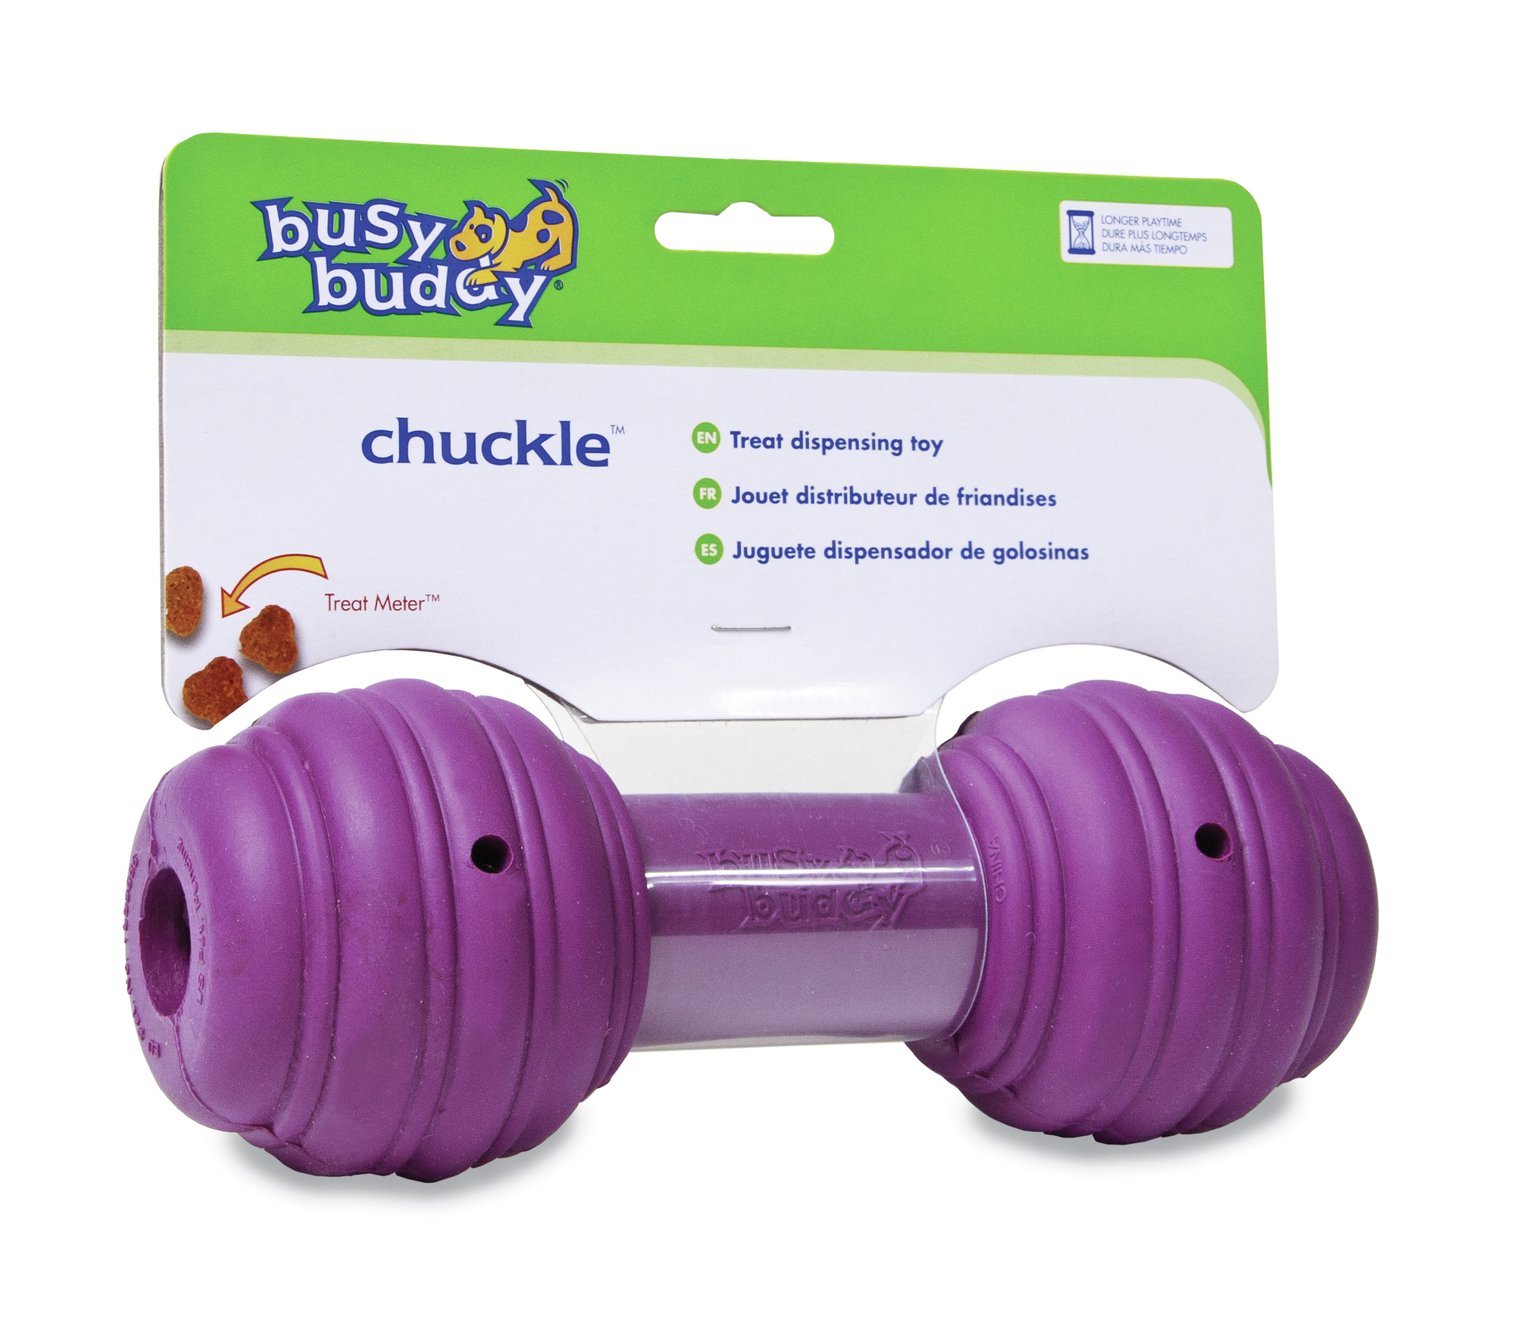 PetSafe Busy Buddy Chuckle Dog Toy